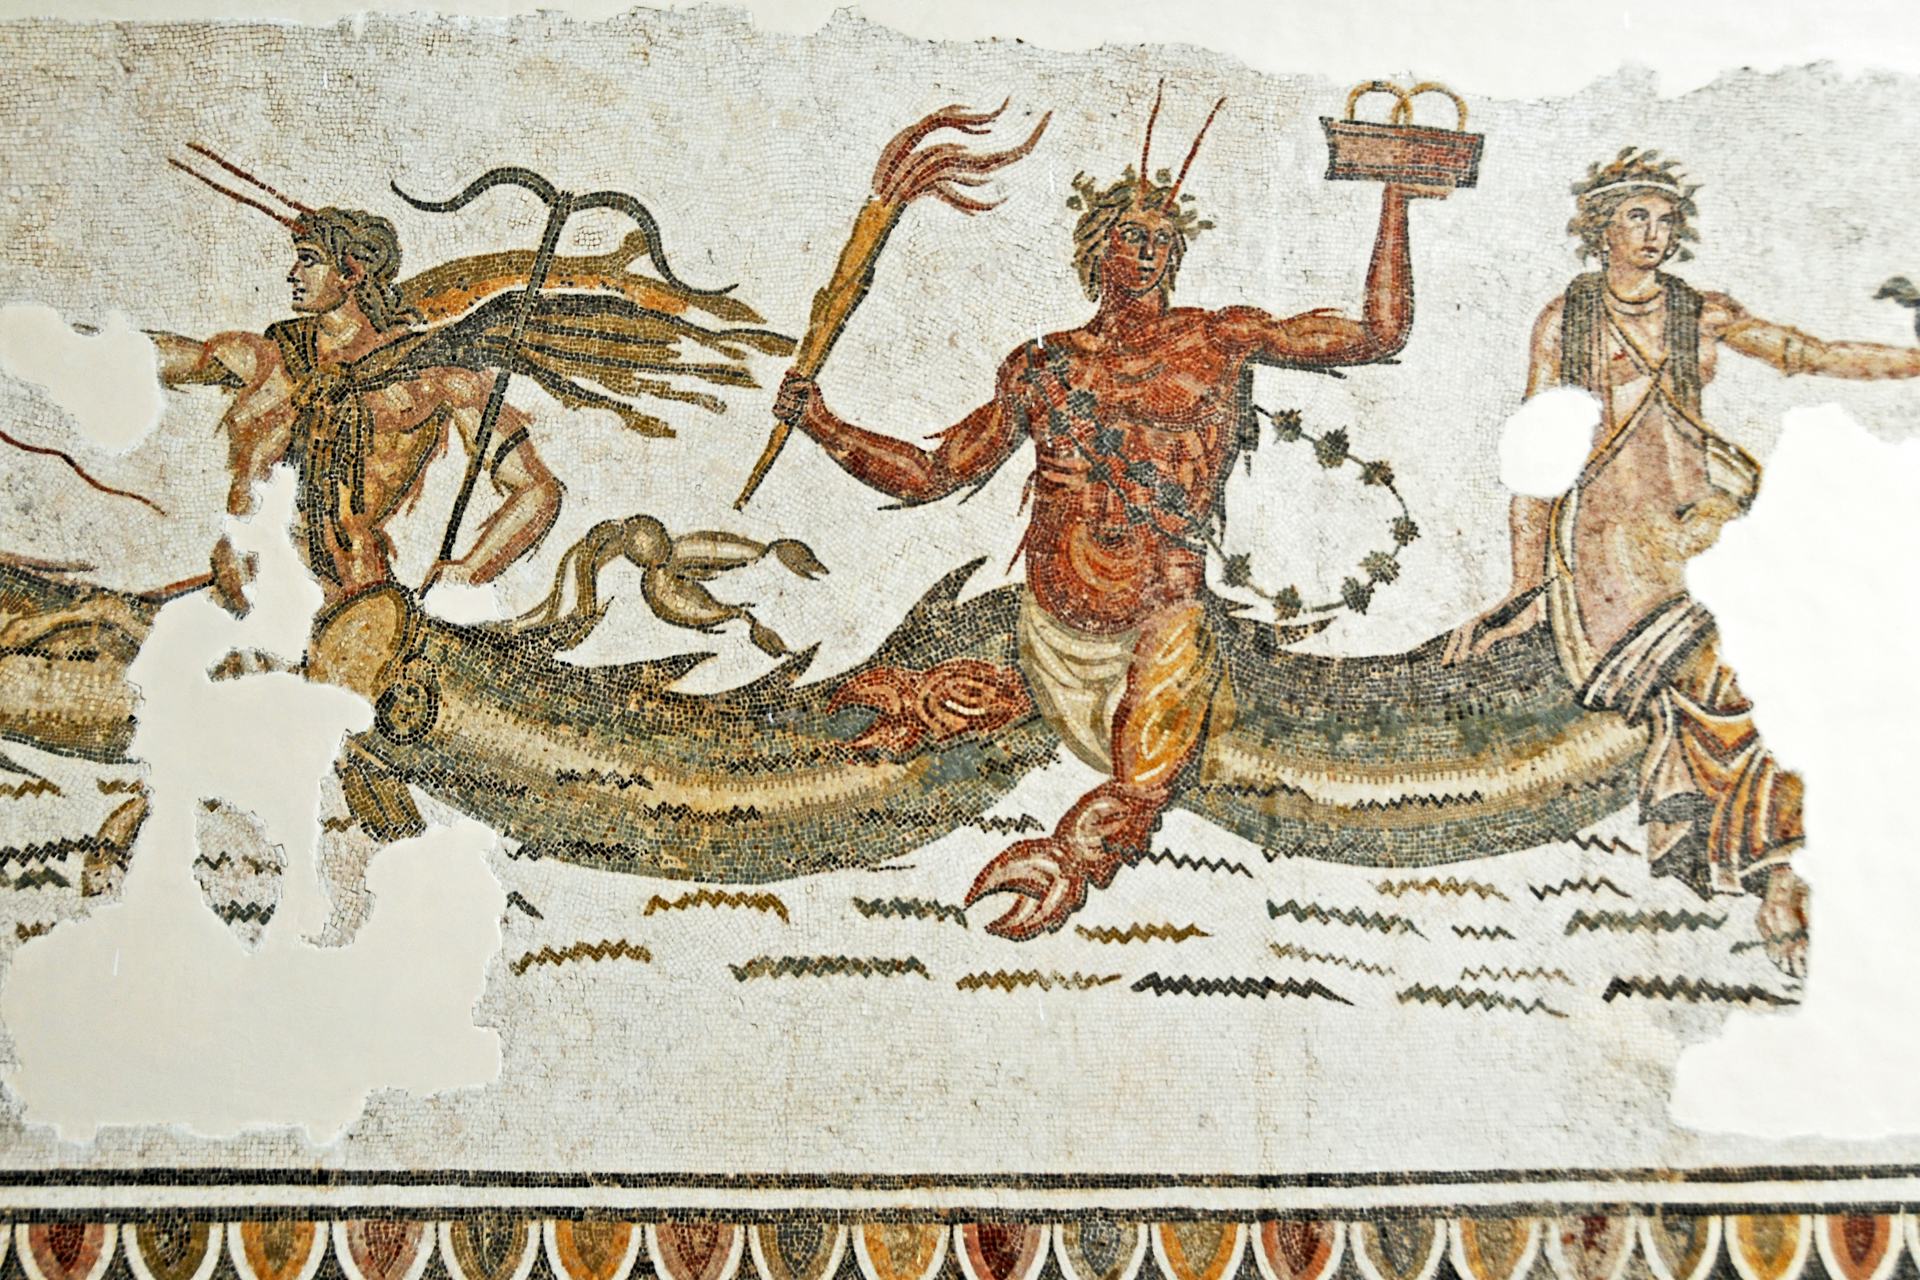 Roman mosaic possibly showing Ceto with Phorcys, Thaumas, and Triton